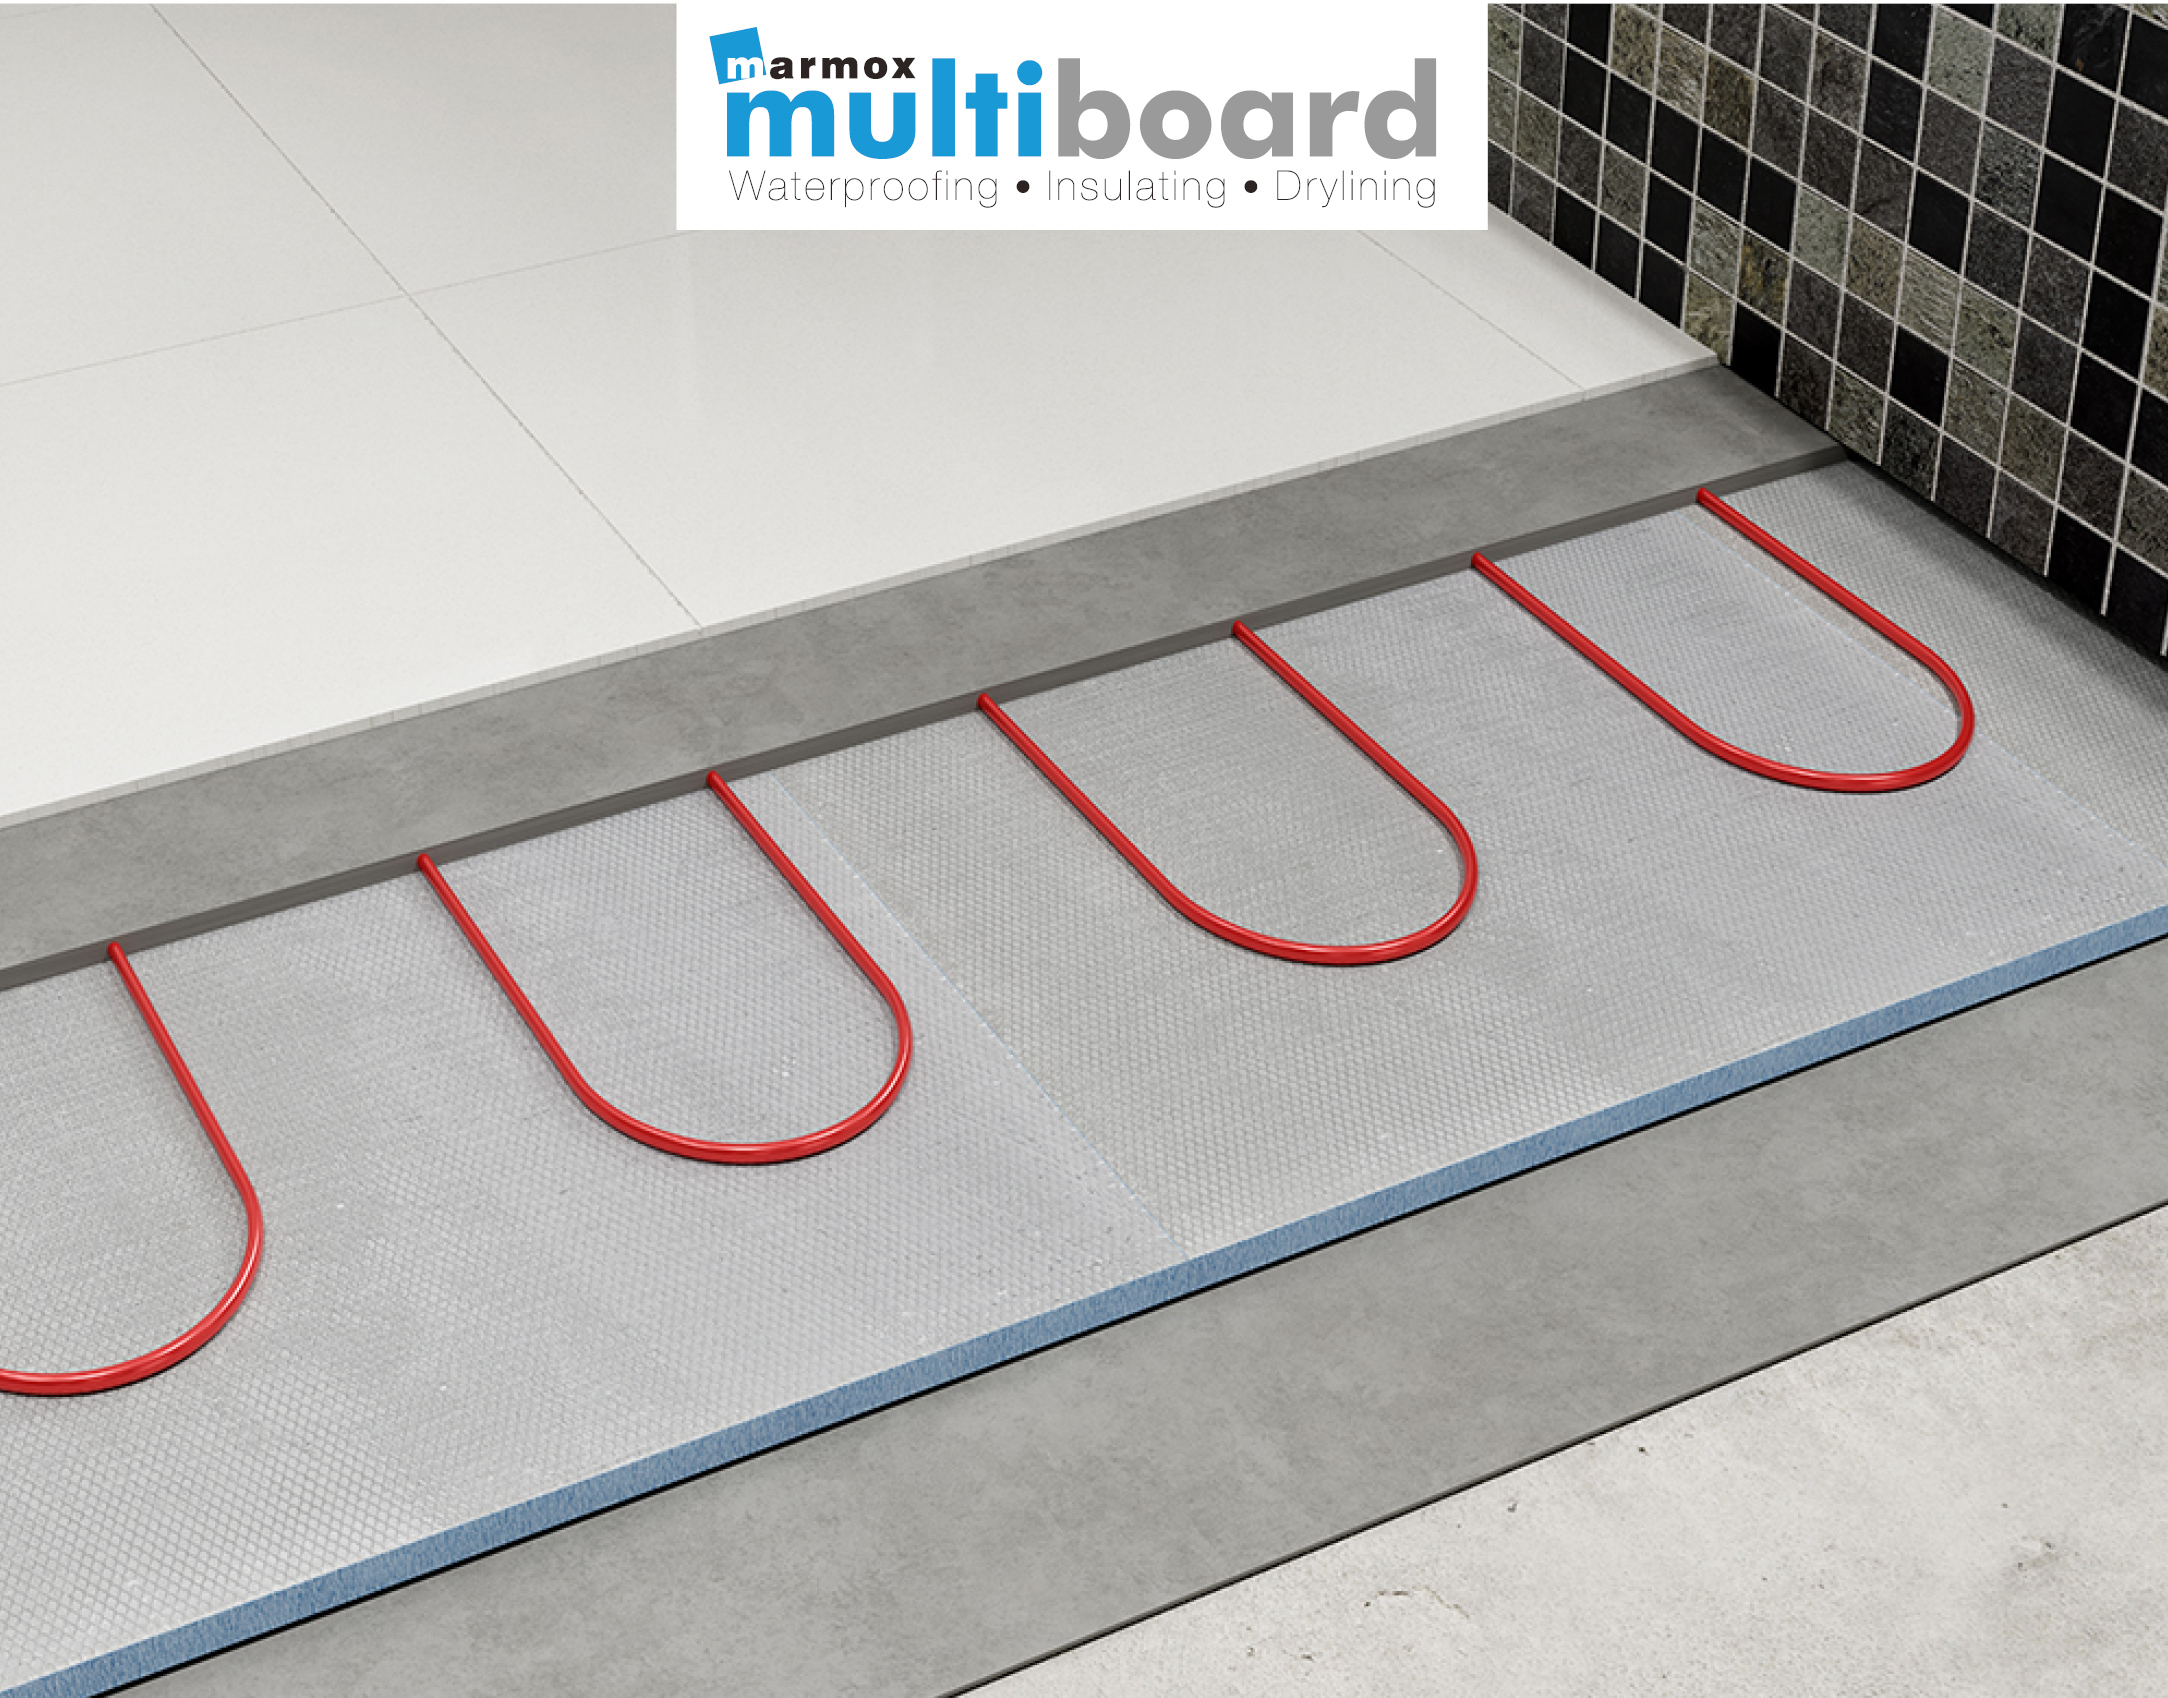 Marmox Multiboard Underfloor Heating